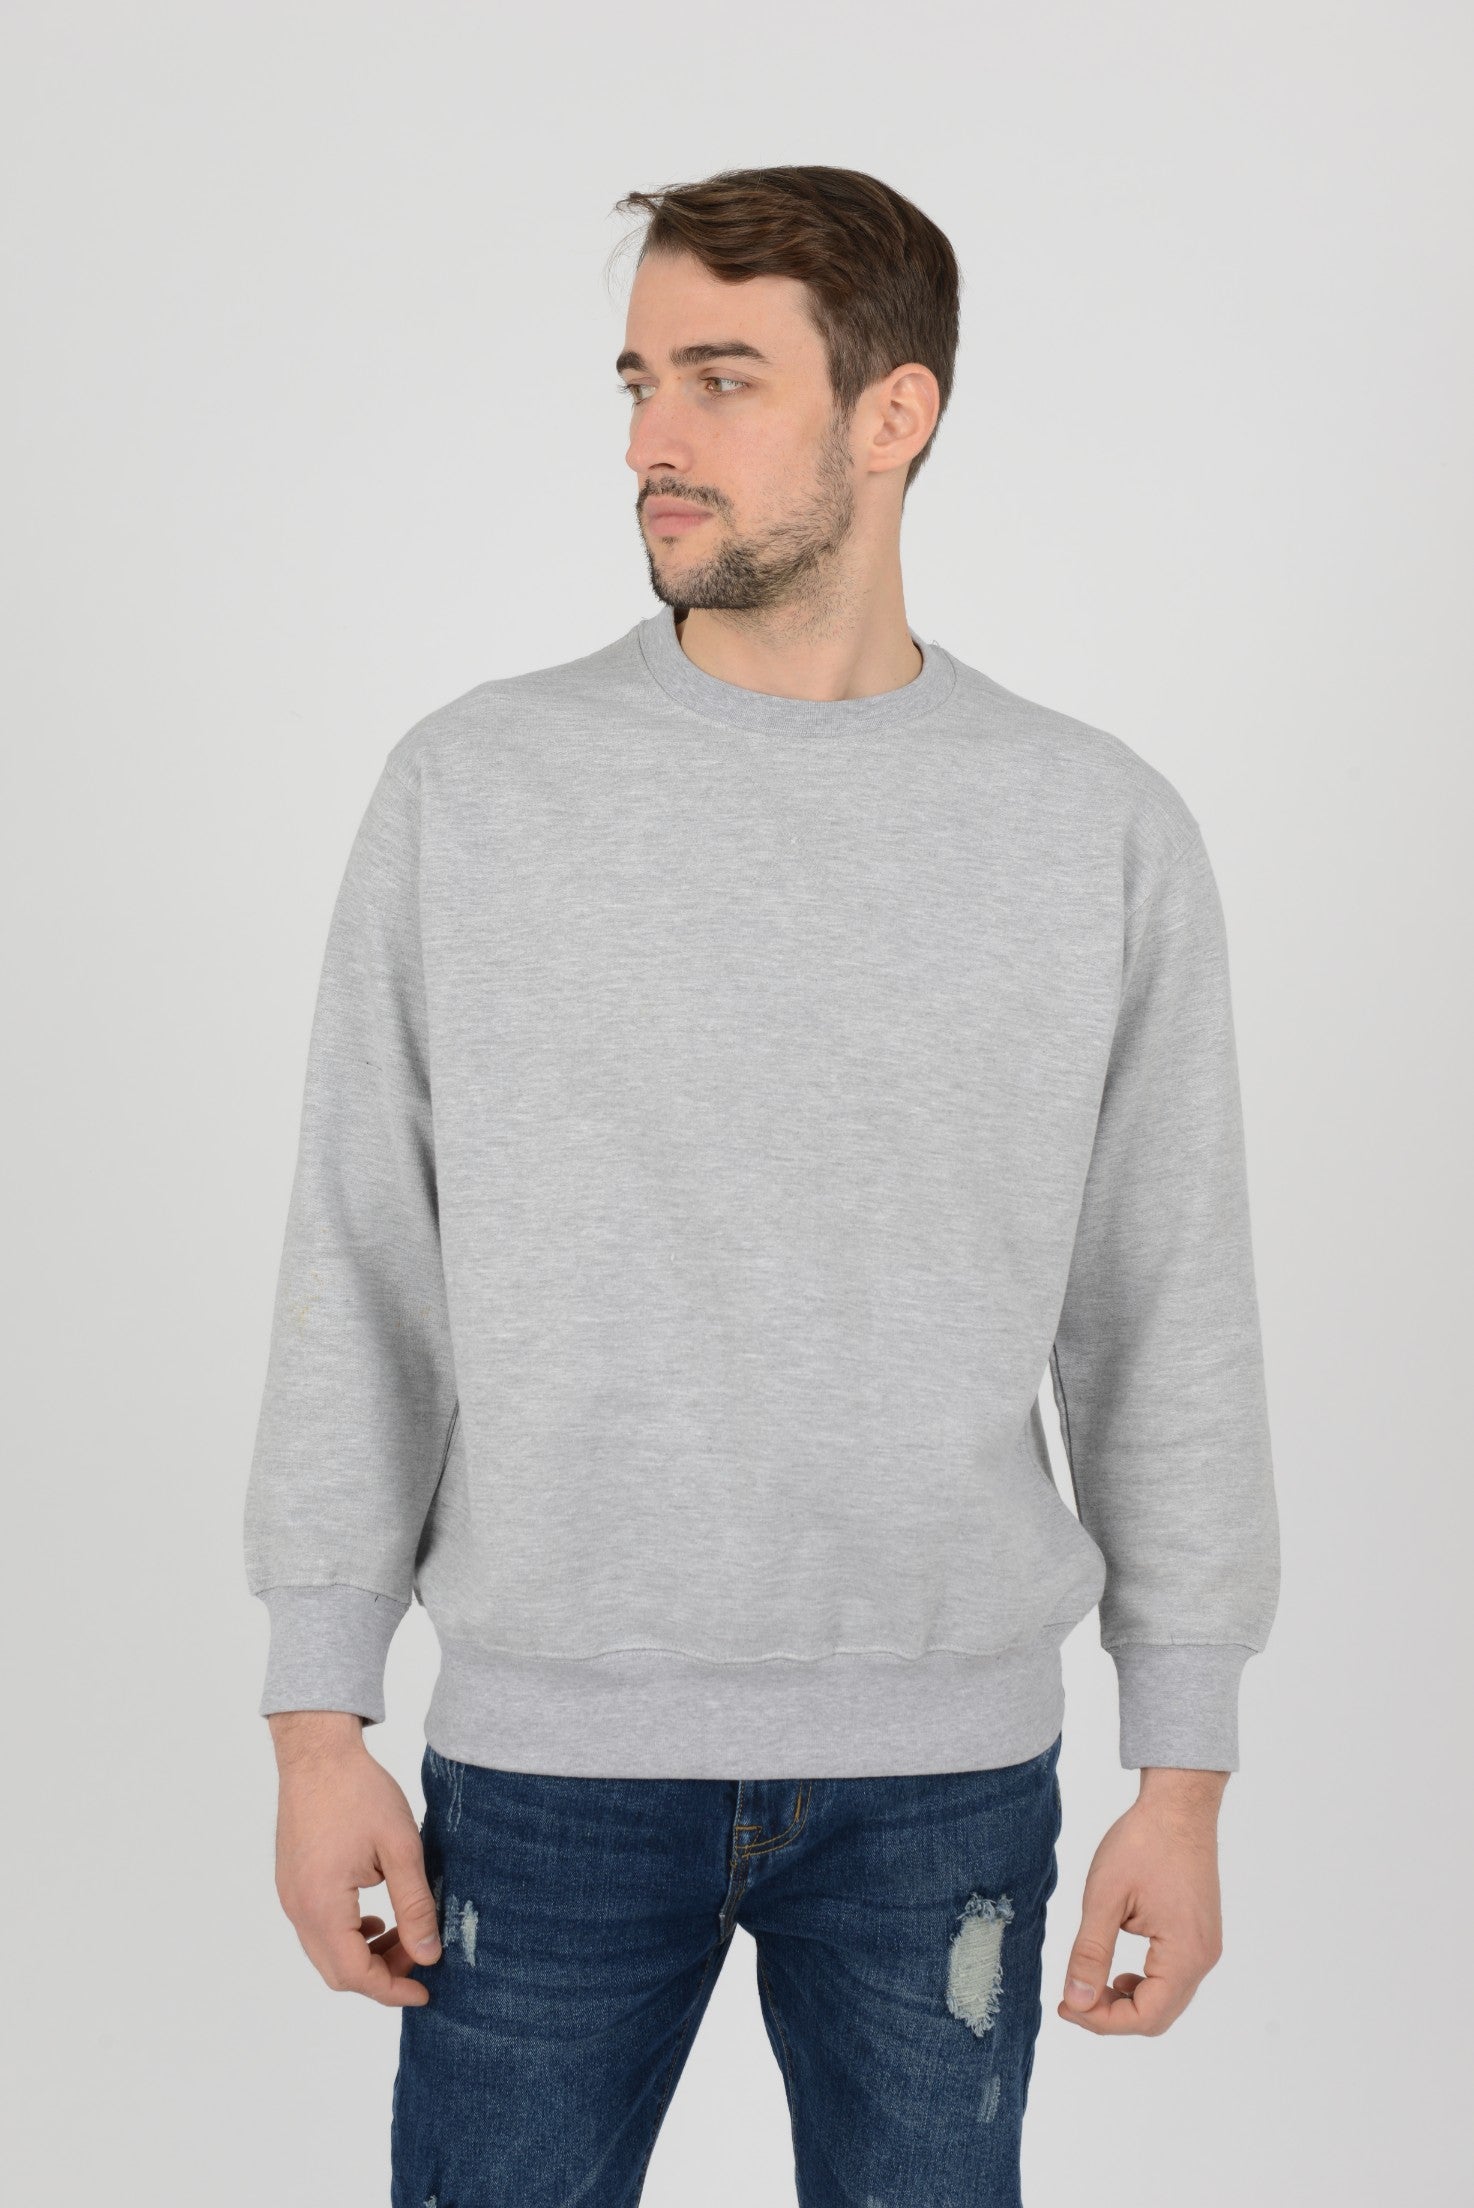 Mens-Plain-Fleece-Sweatshirt-Casual-Light-Grey